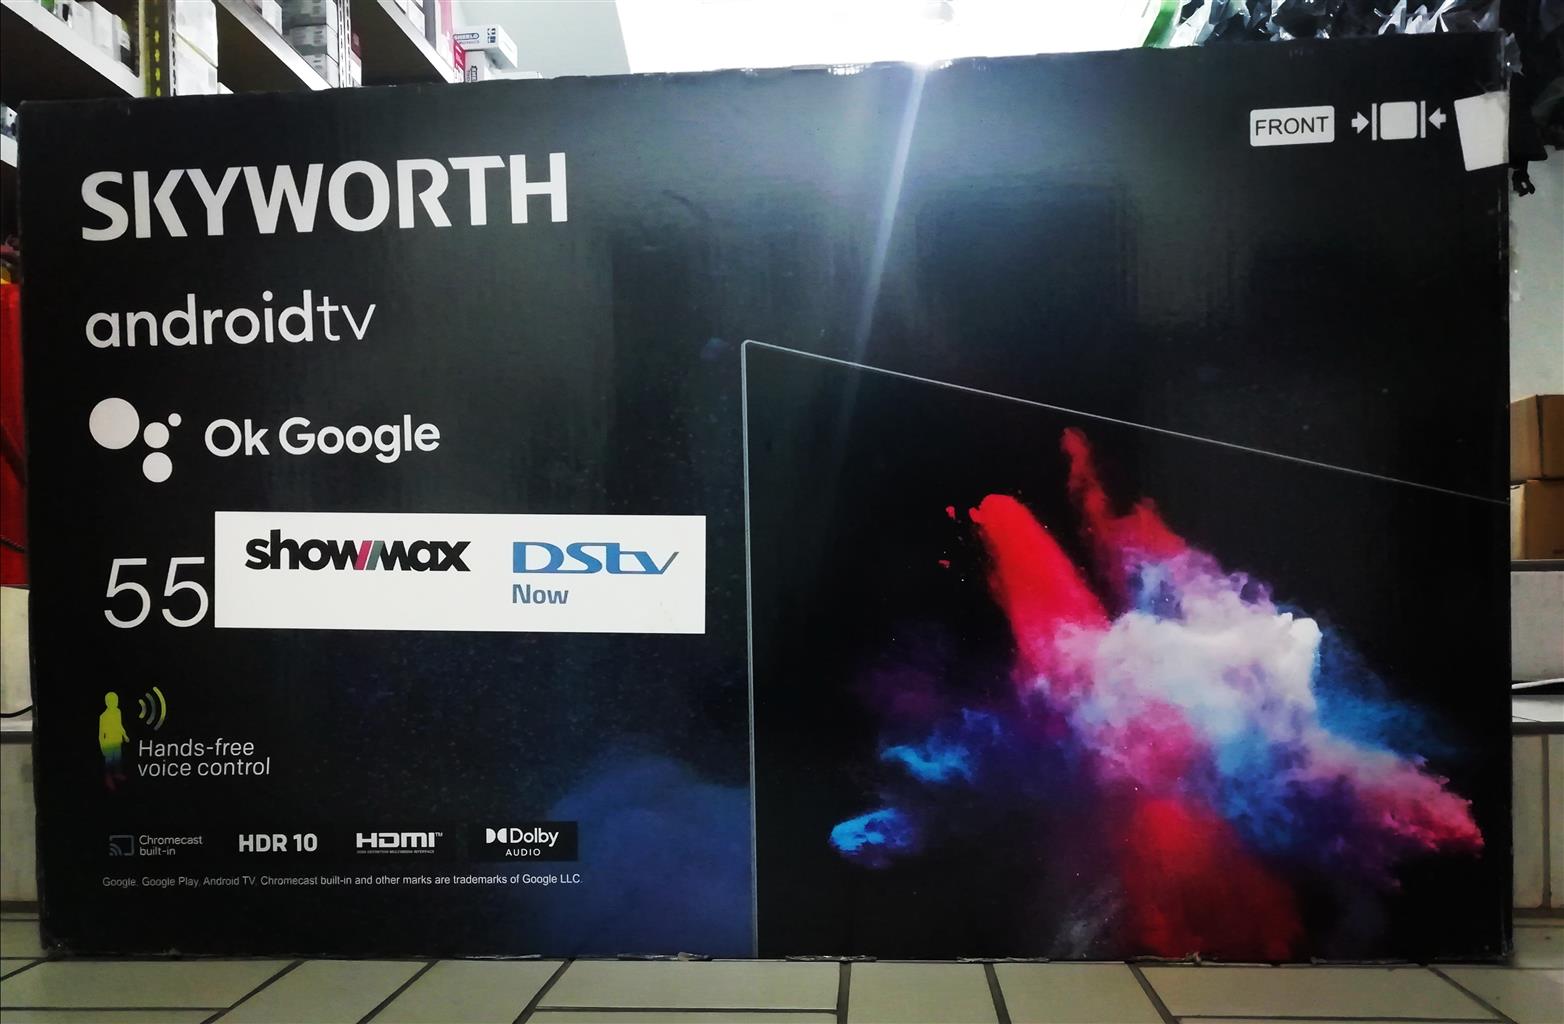 Skyworth 55" Android TV